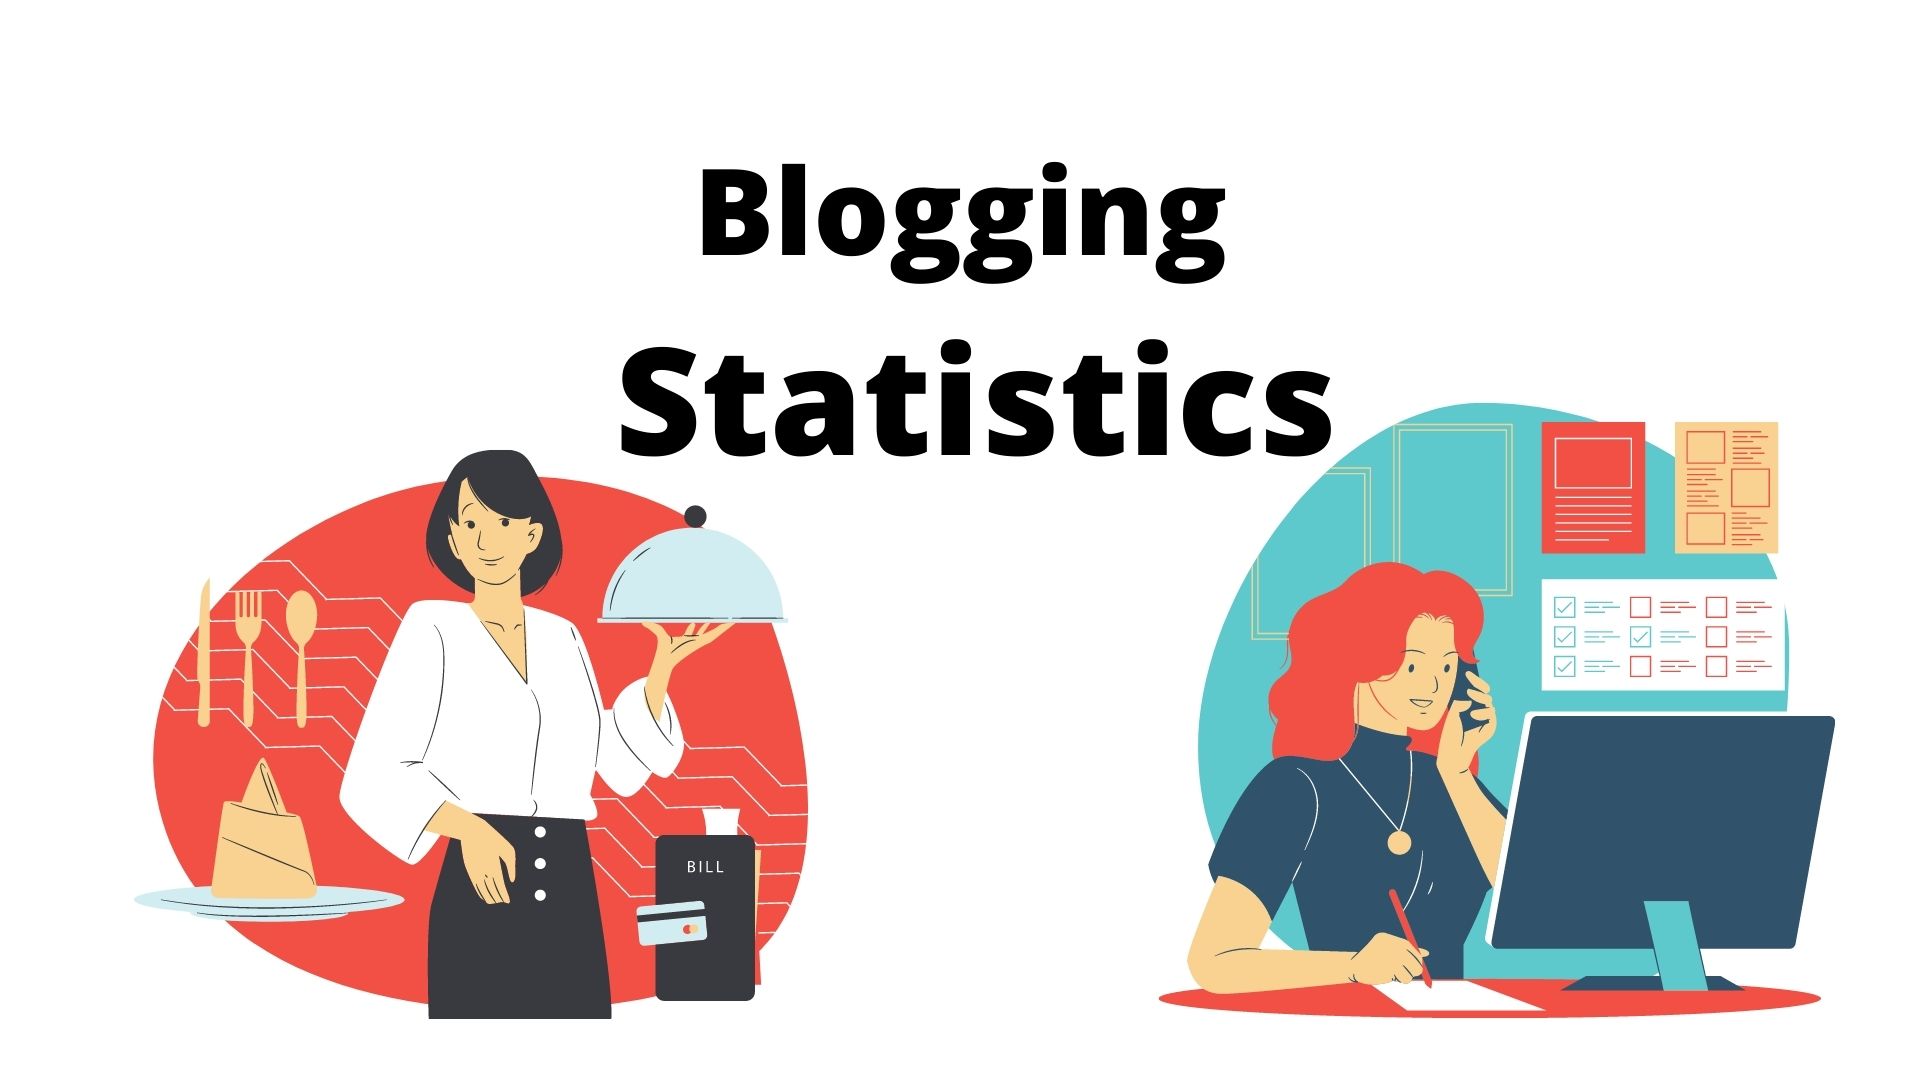 Blogging Statistics By SEO, Traffic, Social Media, Business, Revenue, Visual Content